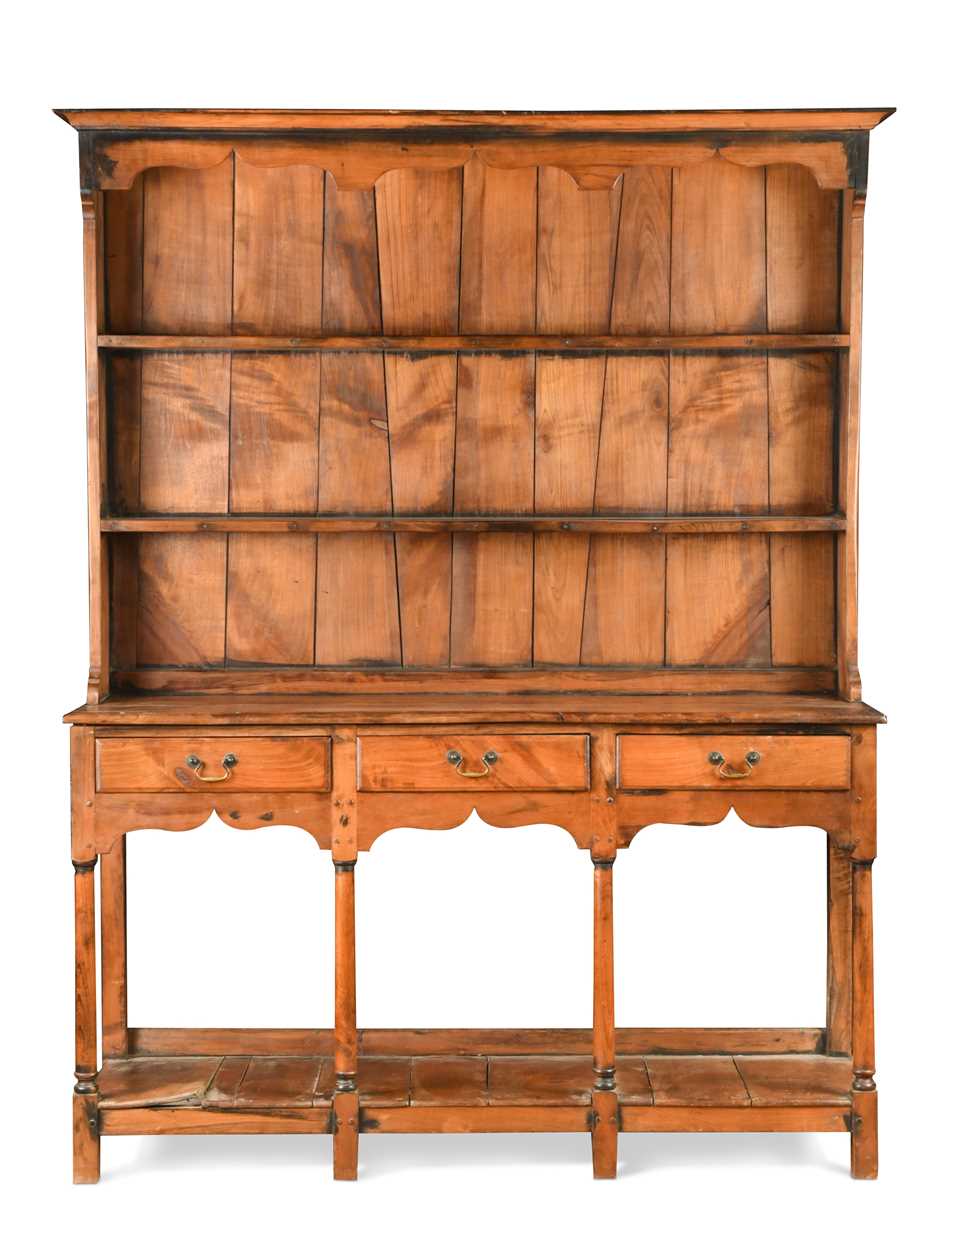 A yew wood dresser, 18th century,